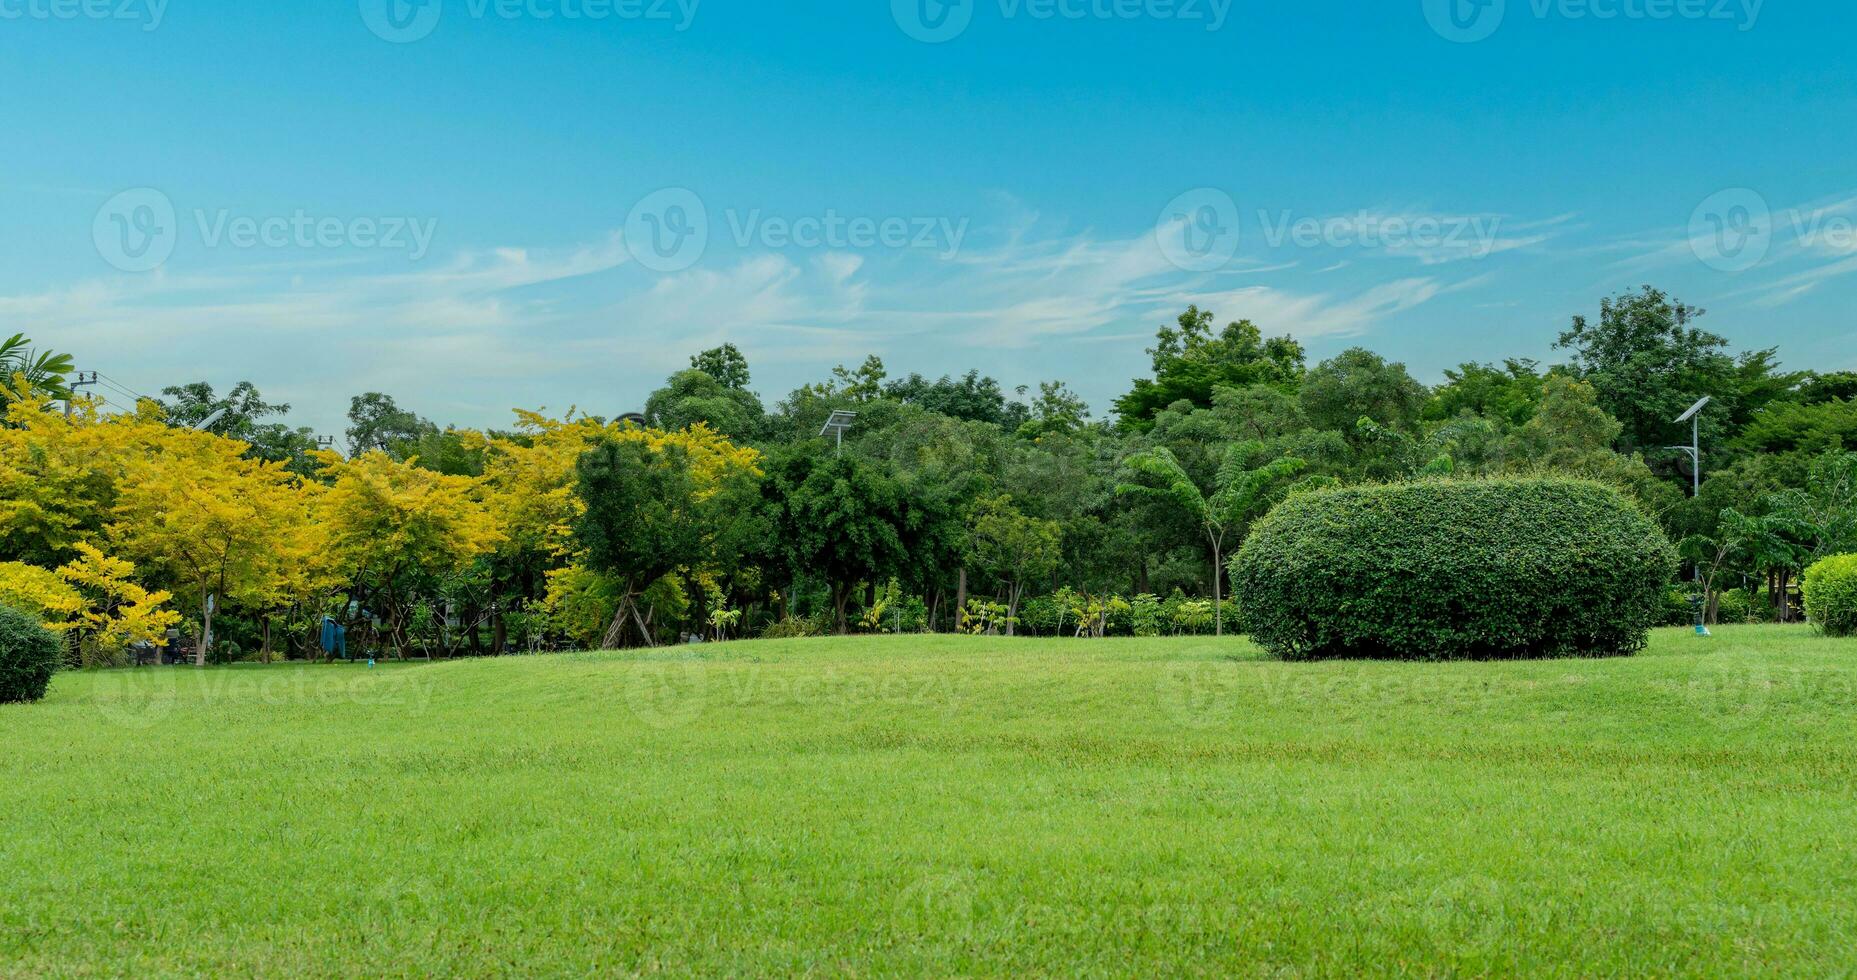 mooi gras veld- en boom met blauw lucht. platteland landschap visie achtergrond foto